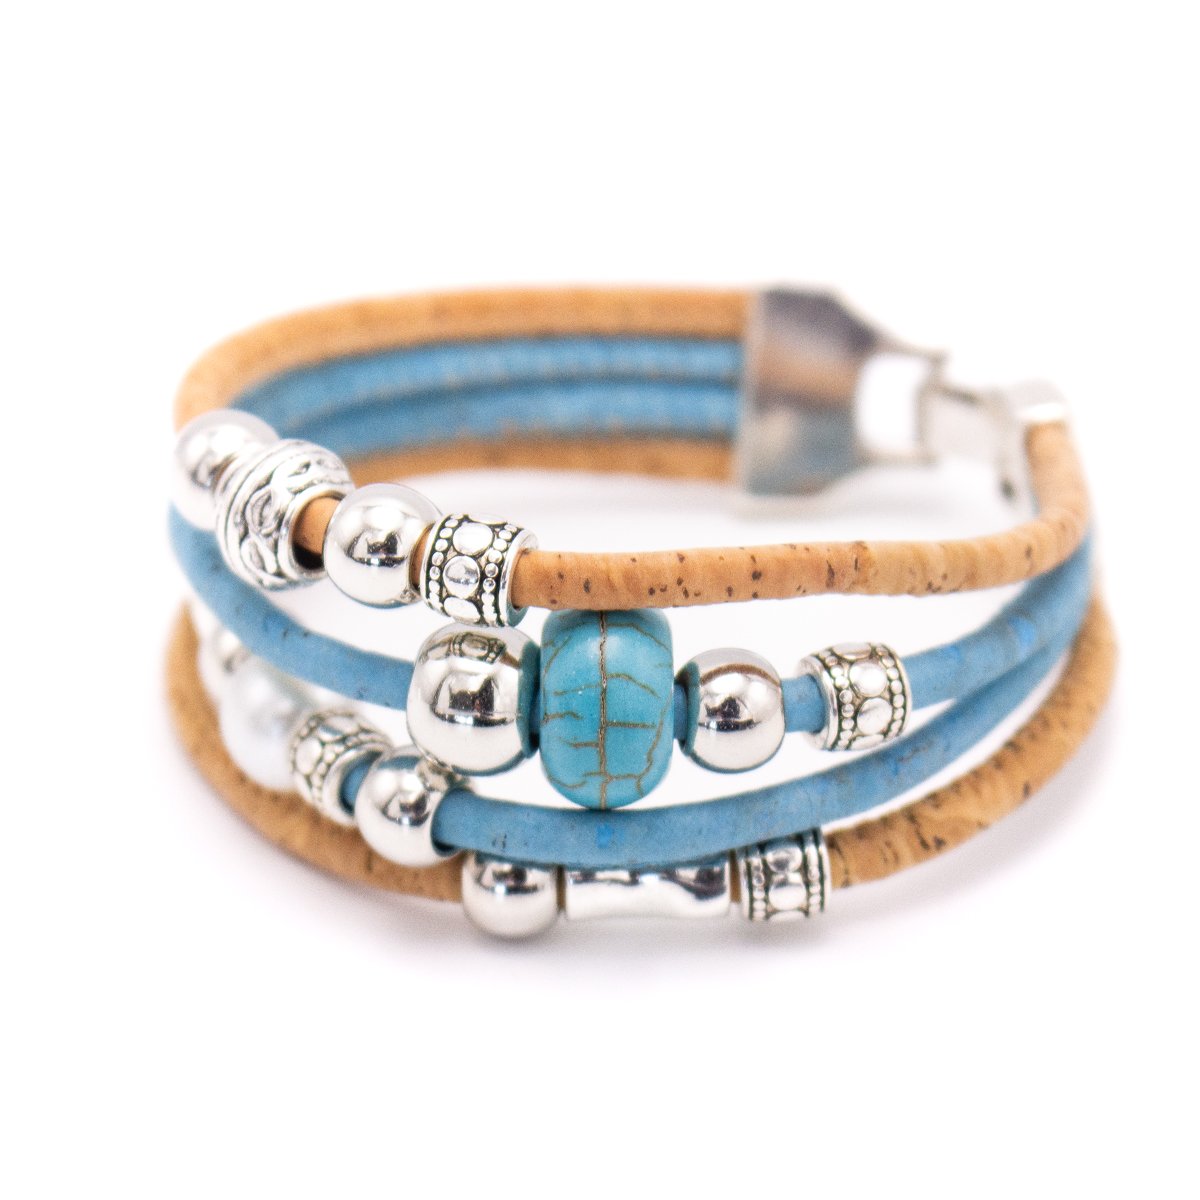 Multi strand turquoise cork bracelet